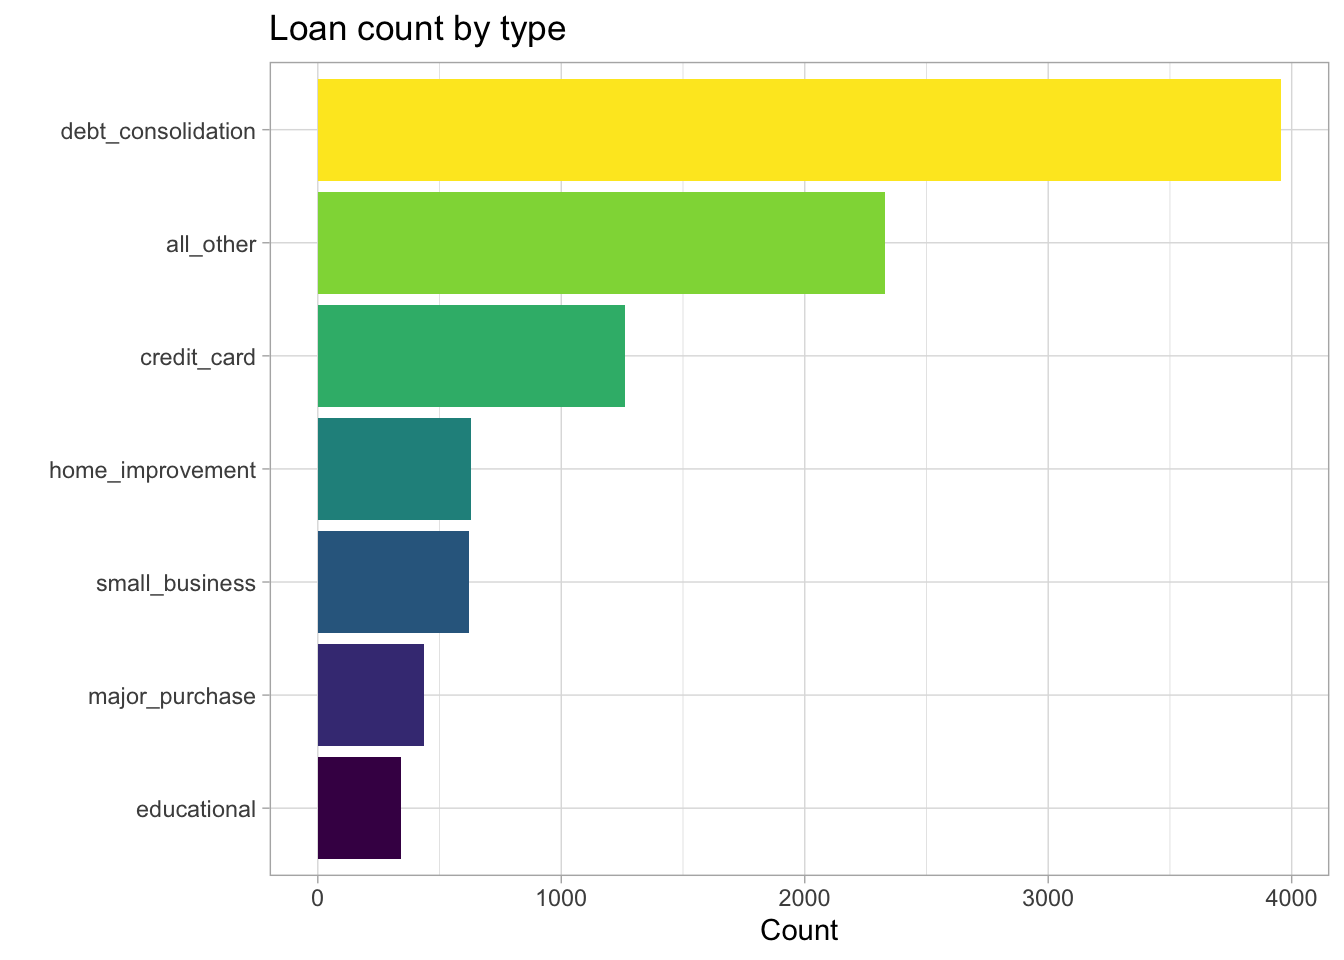 Counts of each loan type